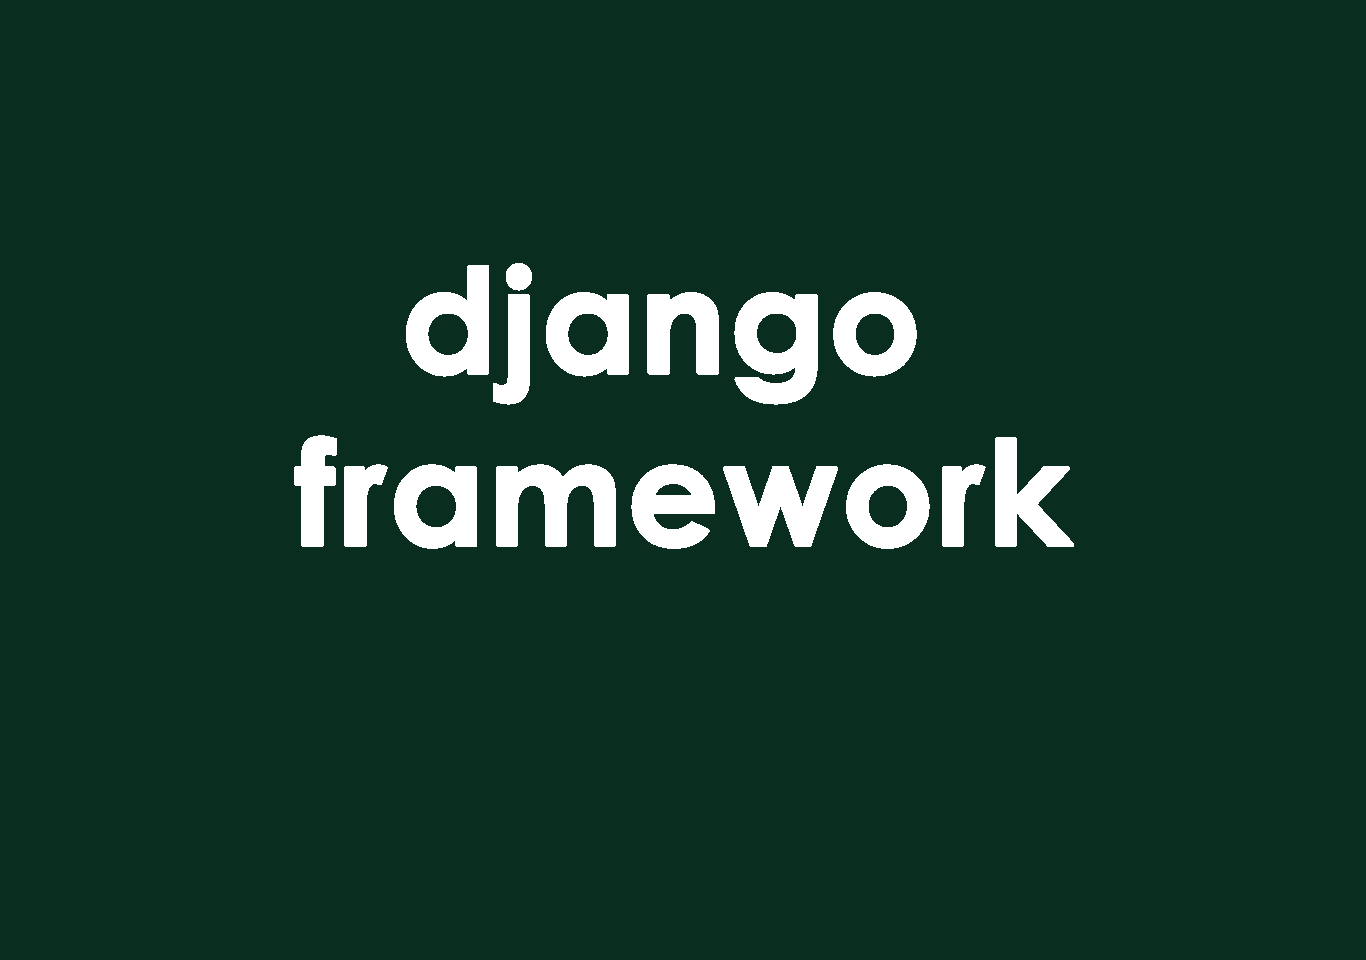 What is Django framework?